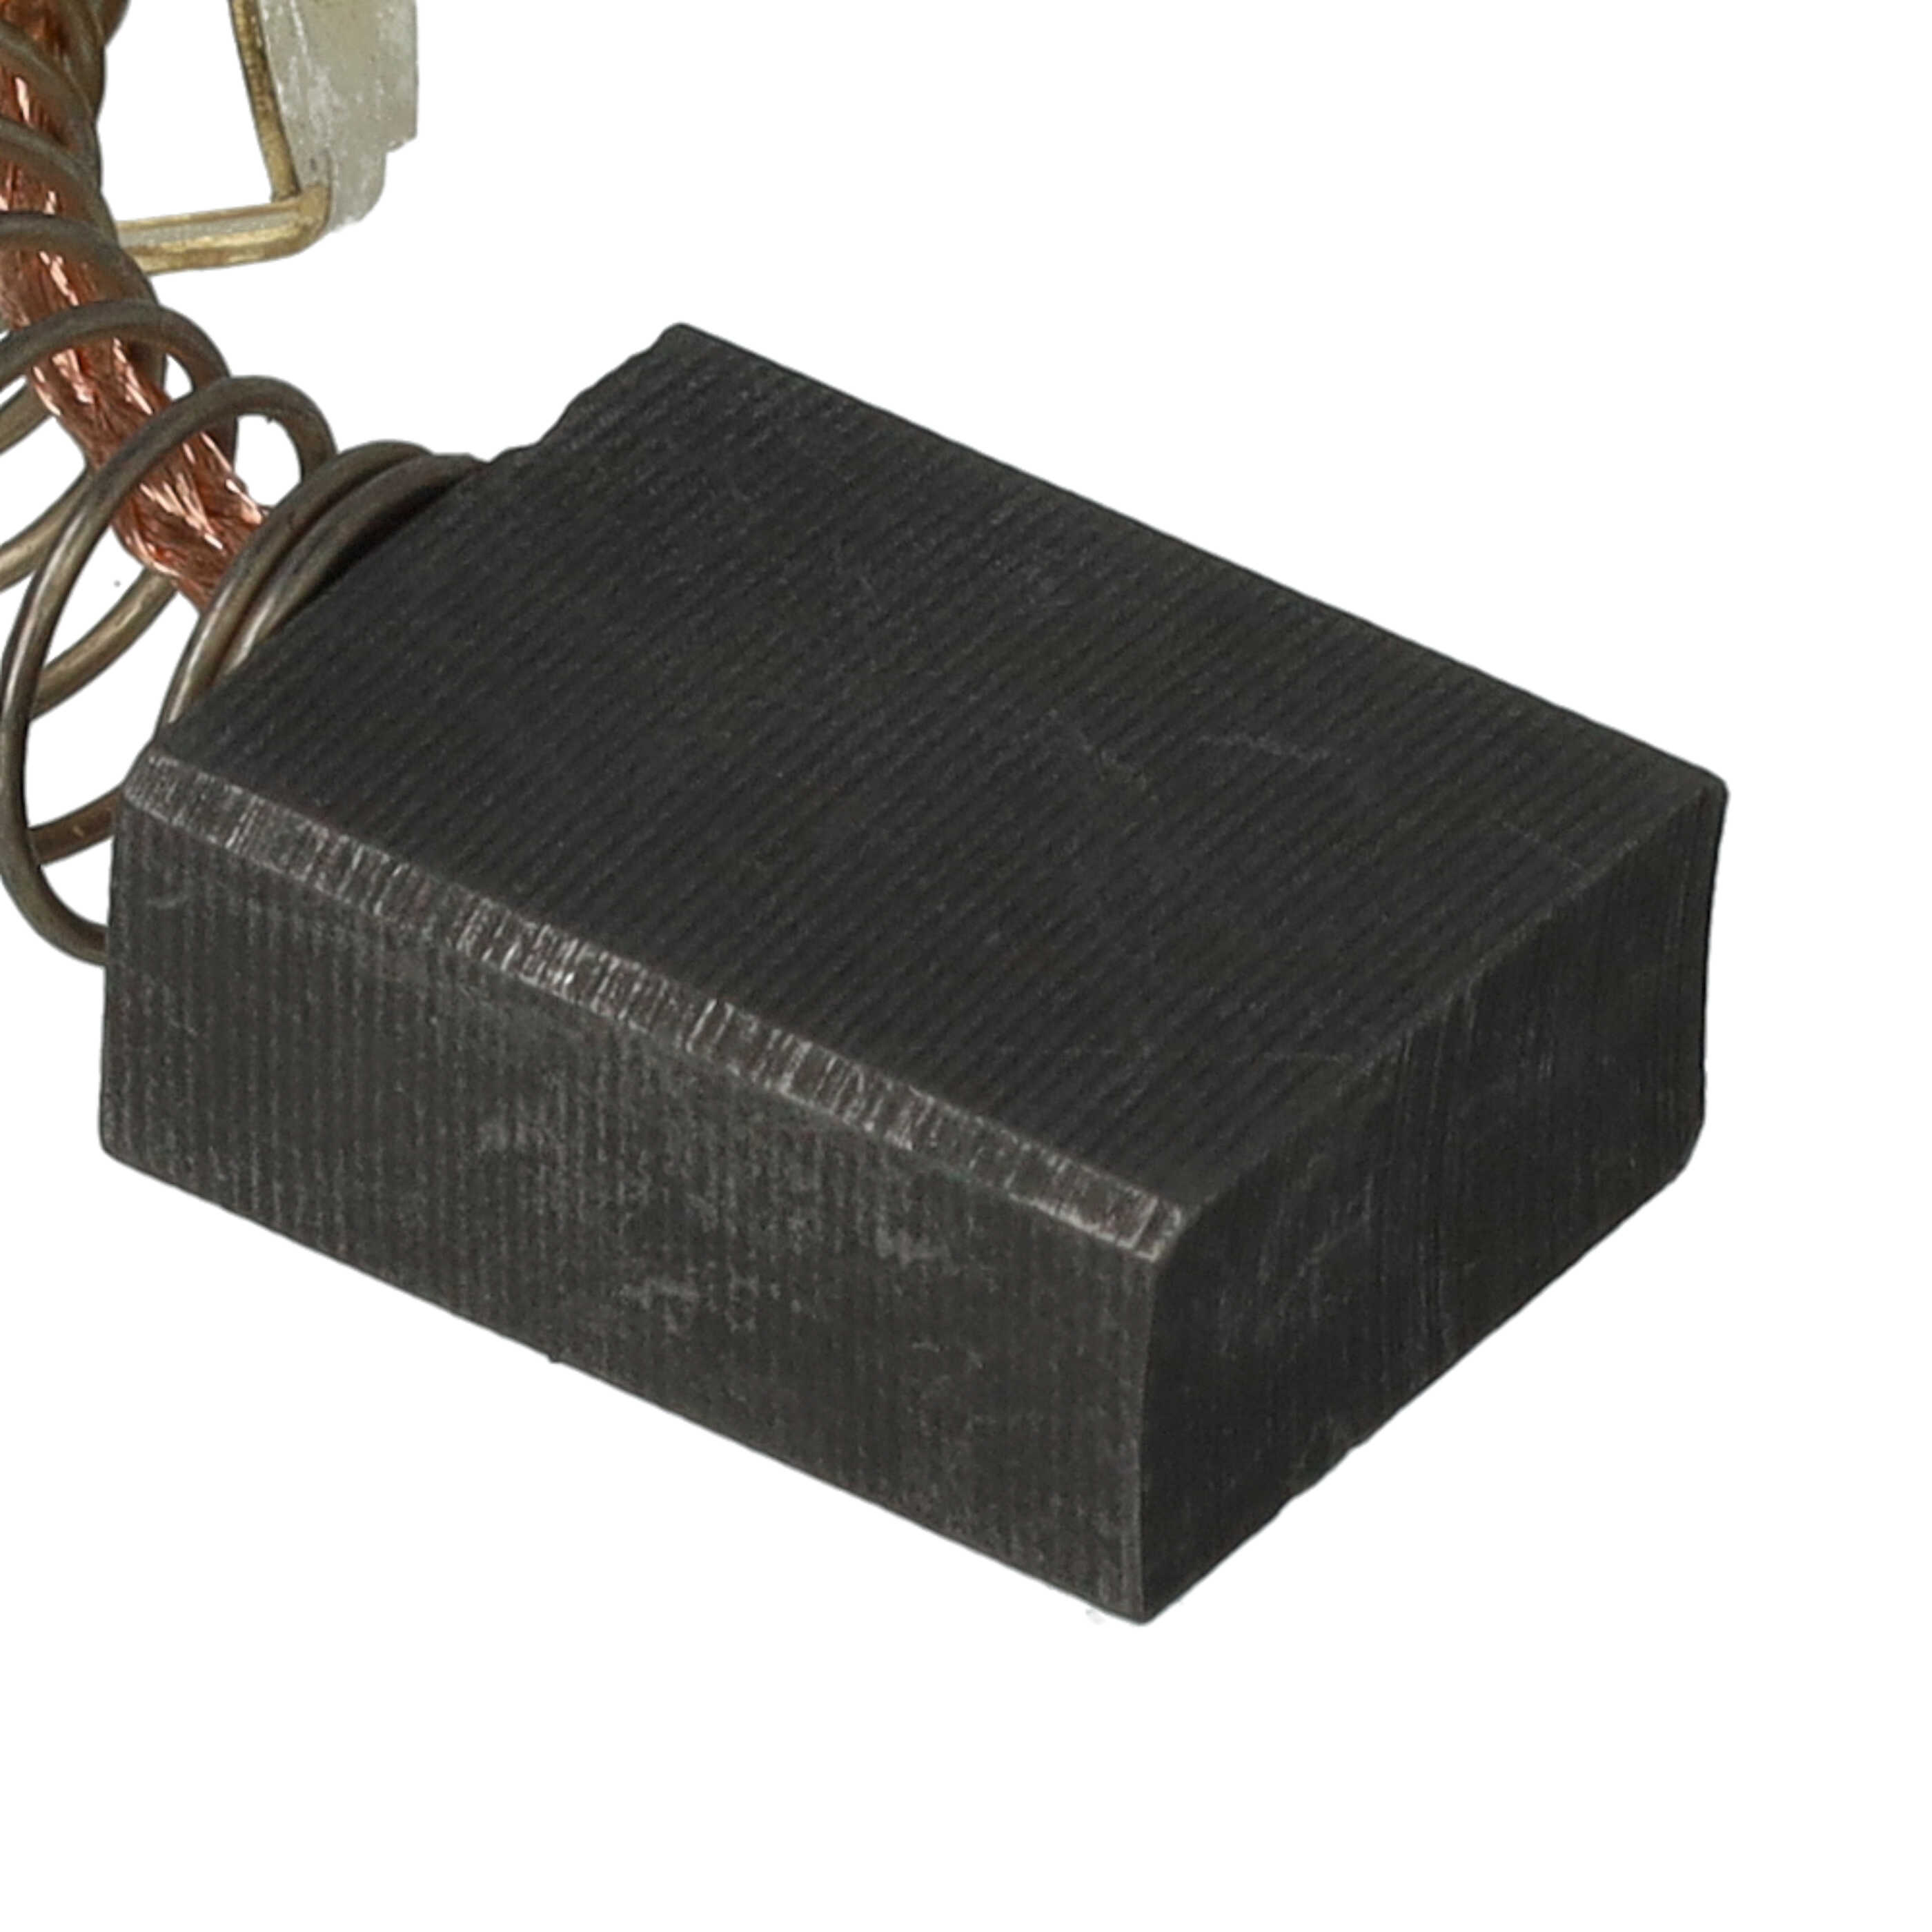 2x Spazzola carbone per utensili Einhell KGSZ 3050 + molla, 16 x 13 x 6,5 mm - Carboncini